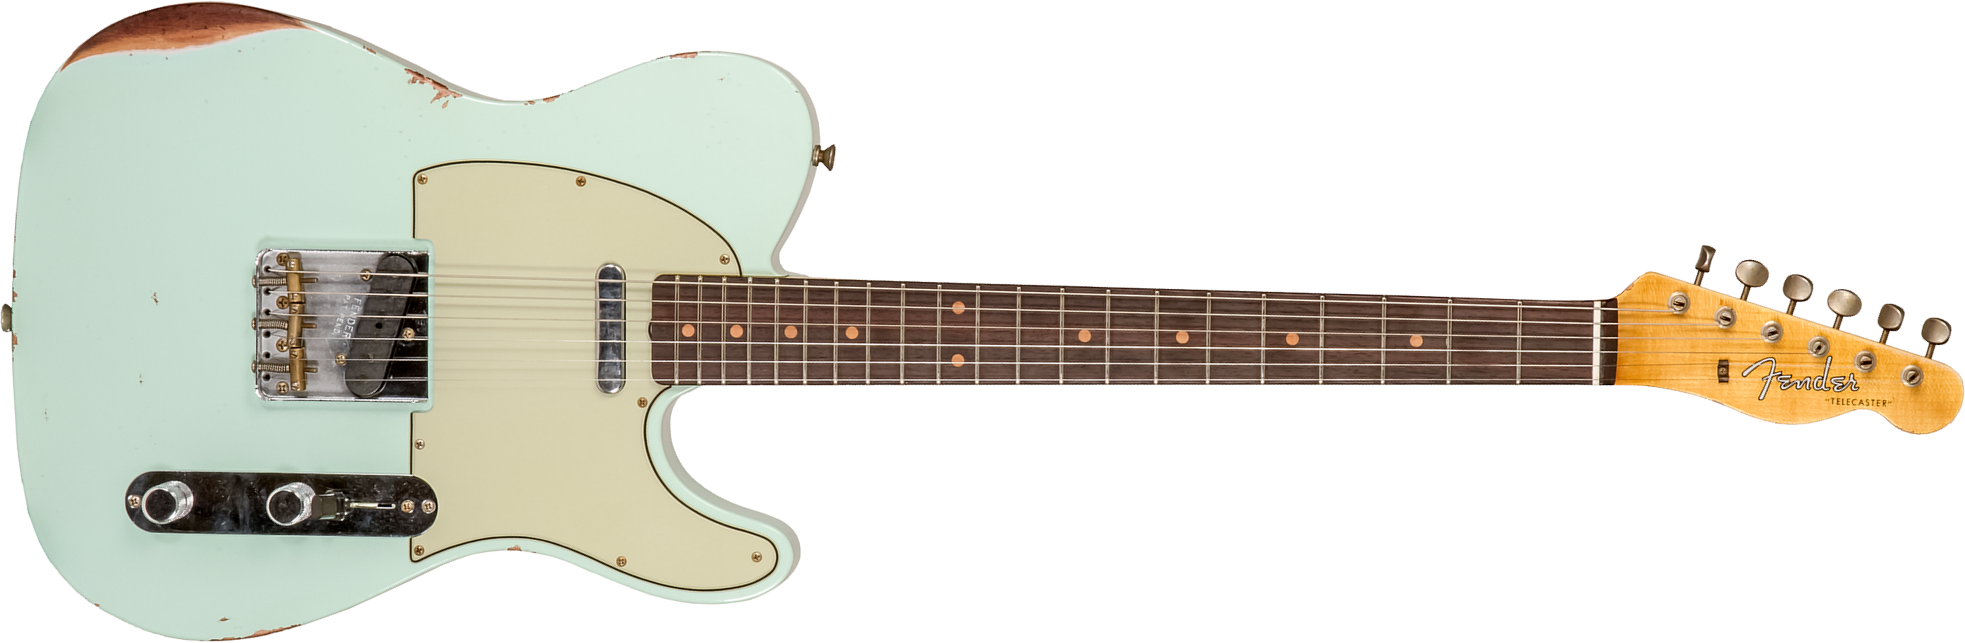 Fender Custom Shop Tele 1961 2s Ht Rw #cz576010 - Relic Aged Surf Green - Televorm elektrische gitaar - Main picture